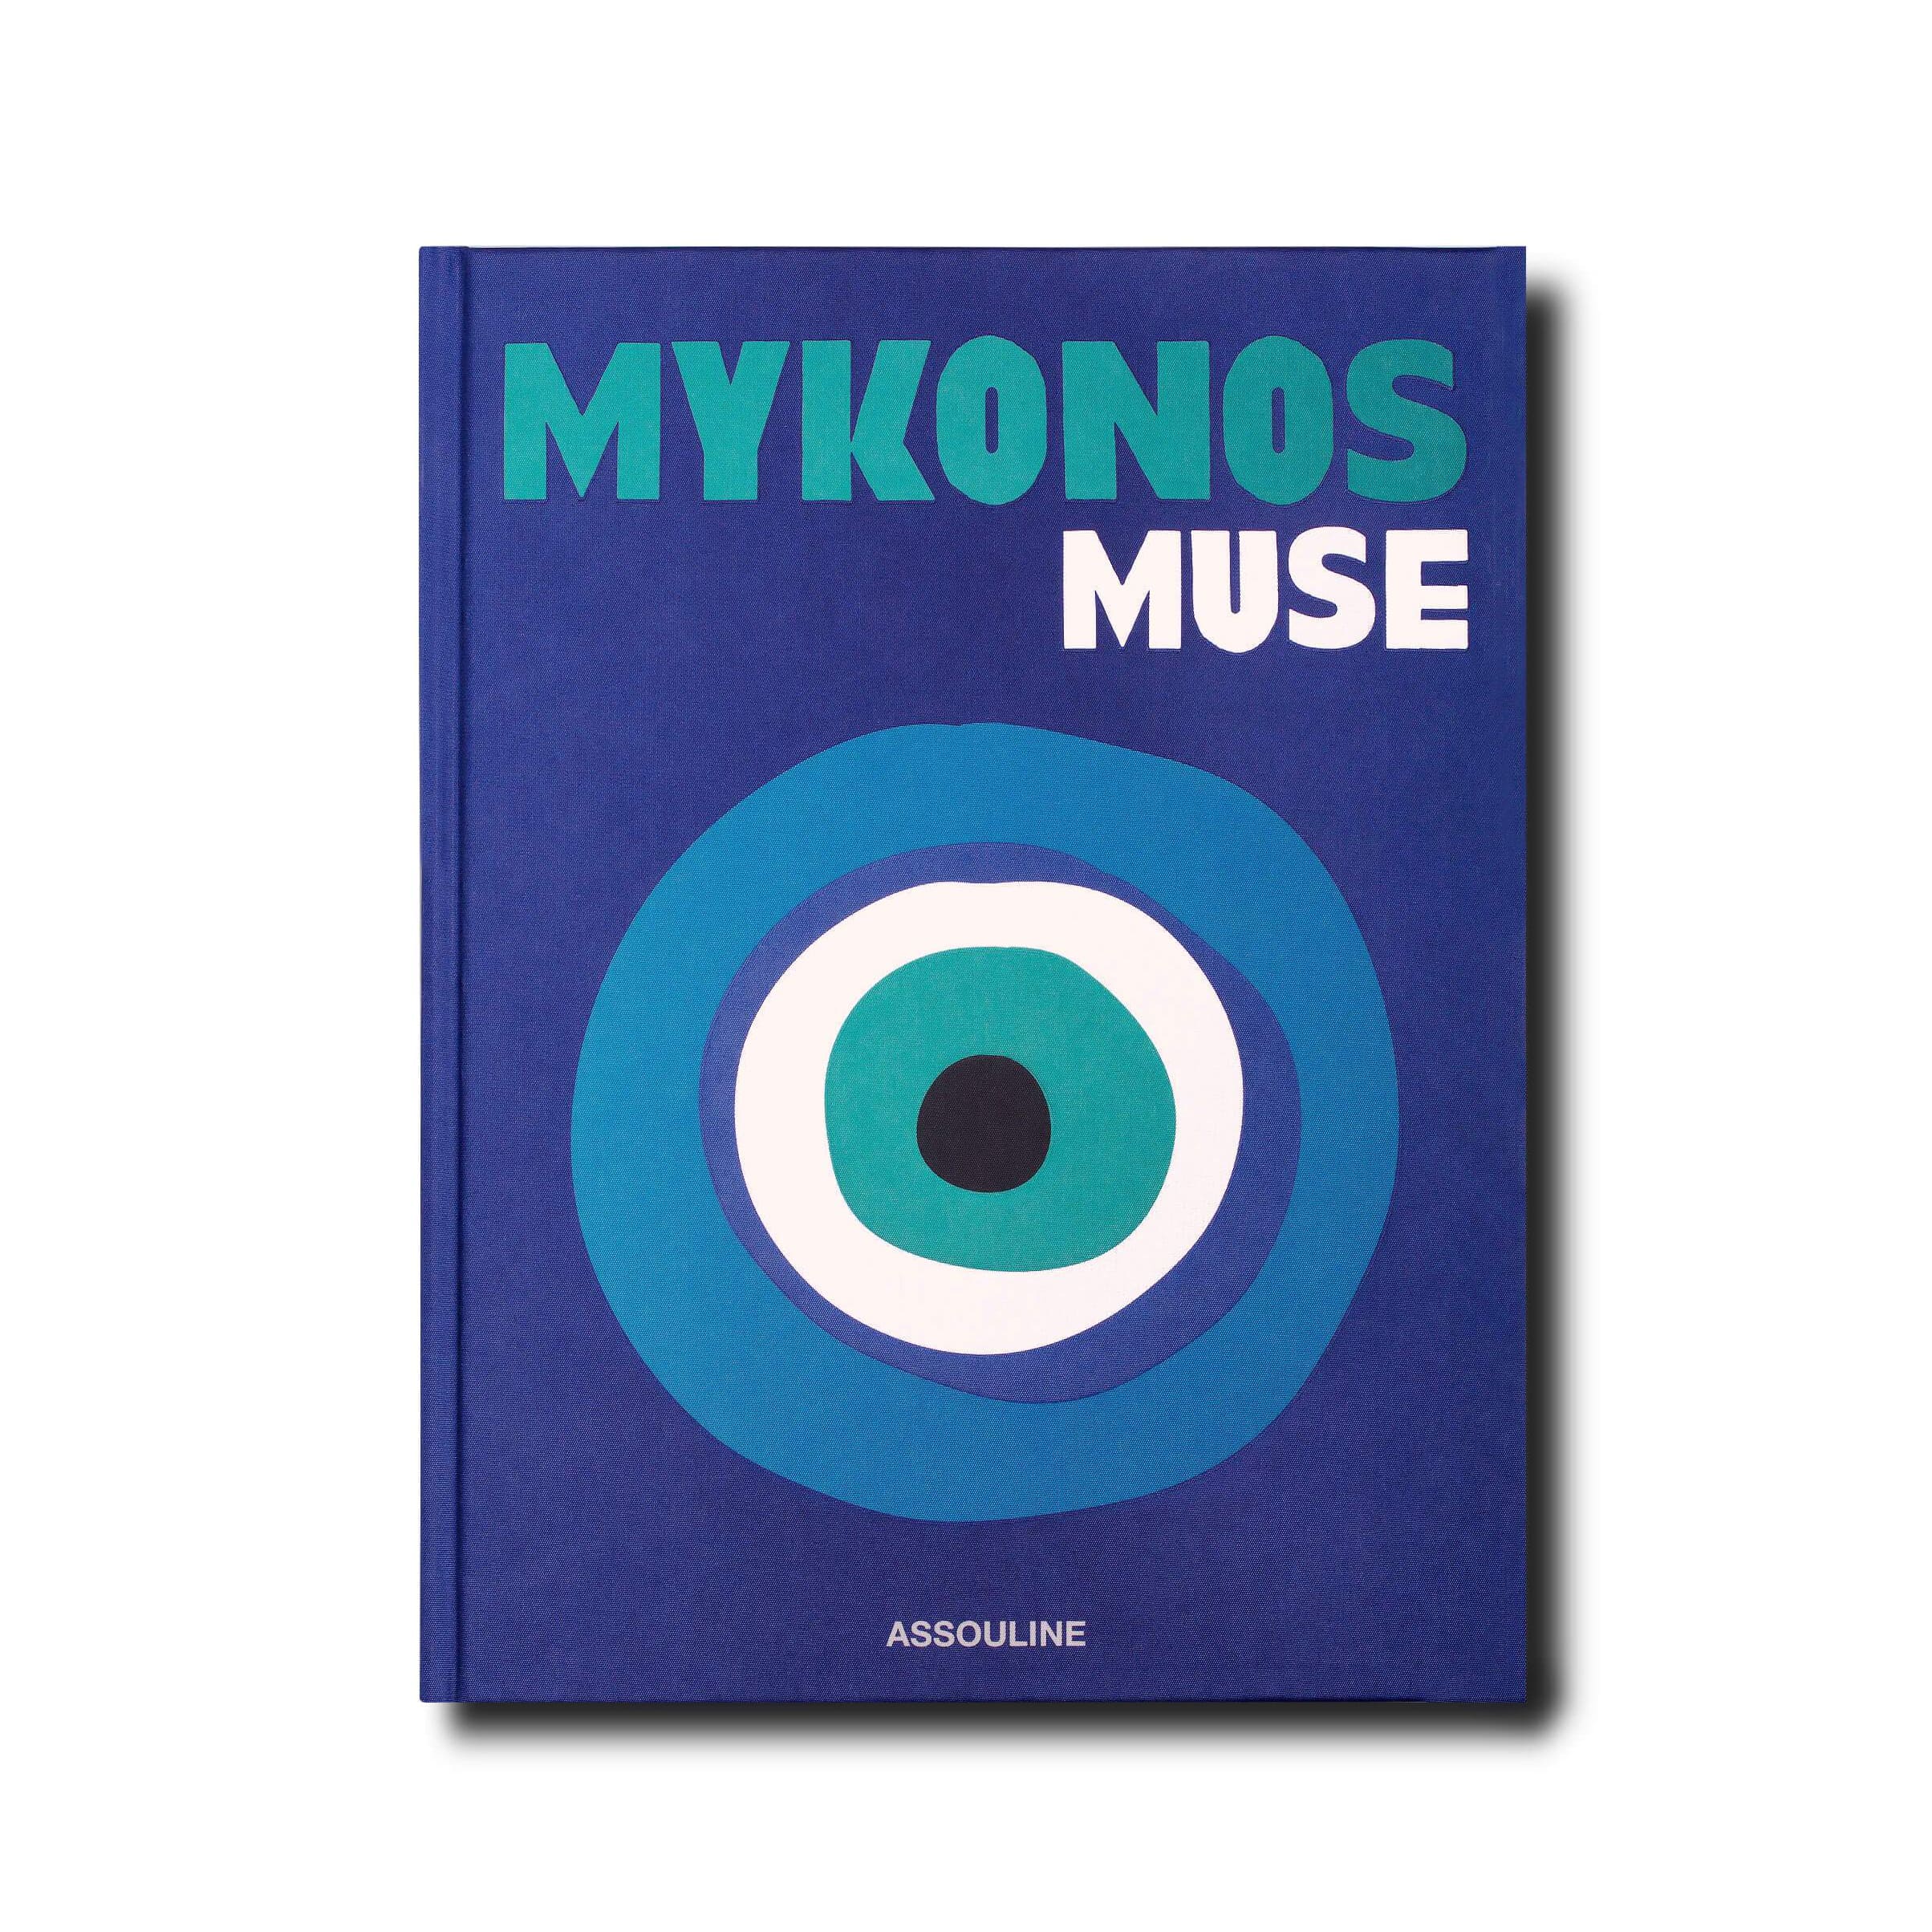 Book Mykonos Muse Assouline